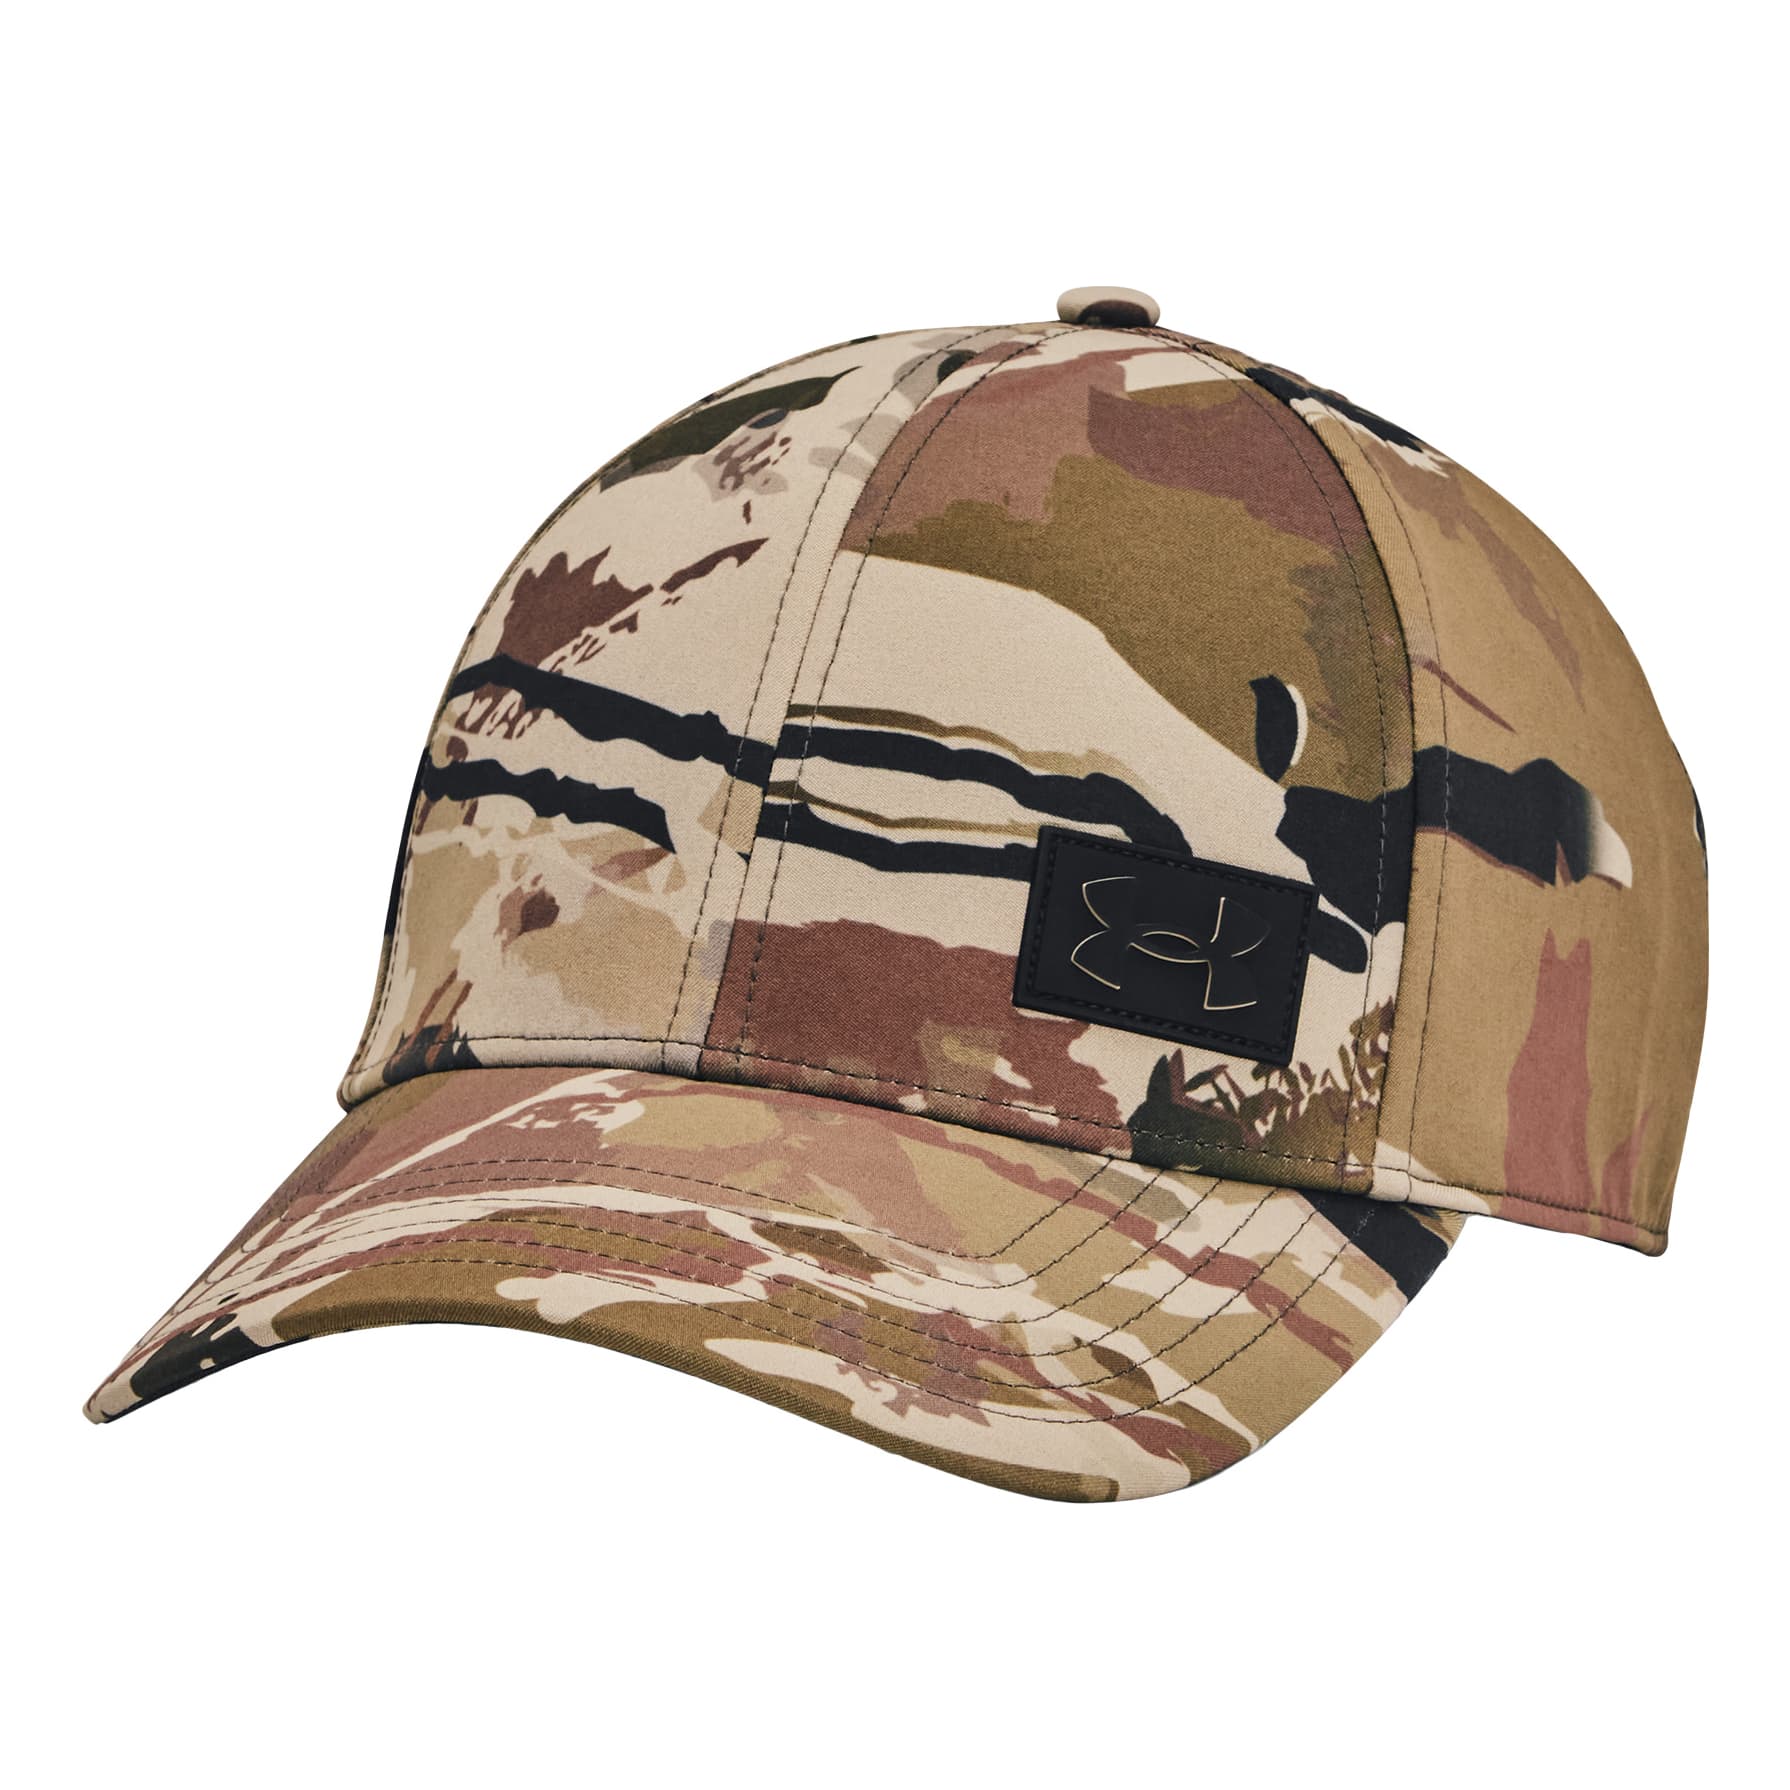 Under Armor Real tree Camouflage Hat Cap Logo Adjustable